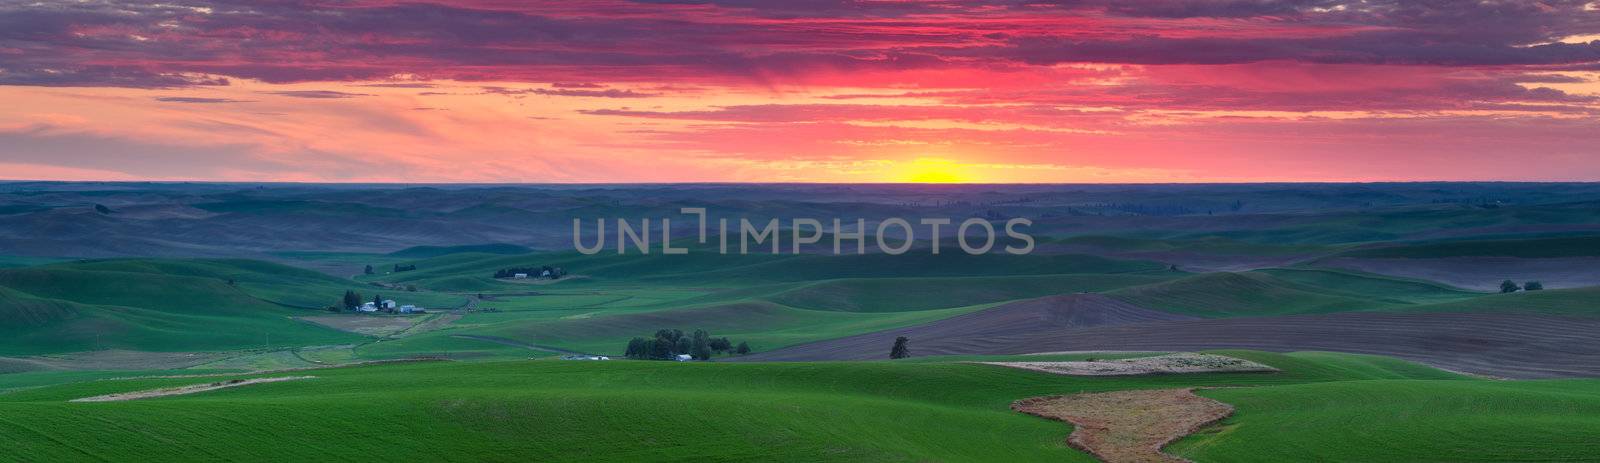 Sunset and green hills, Whitman County, Washington, USA by CharlesBolin